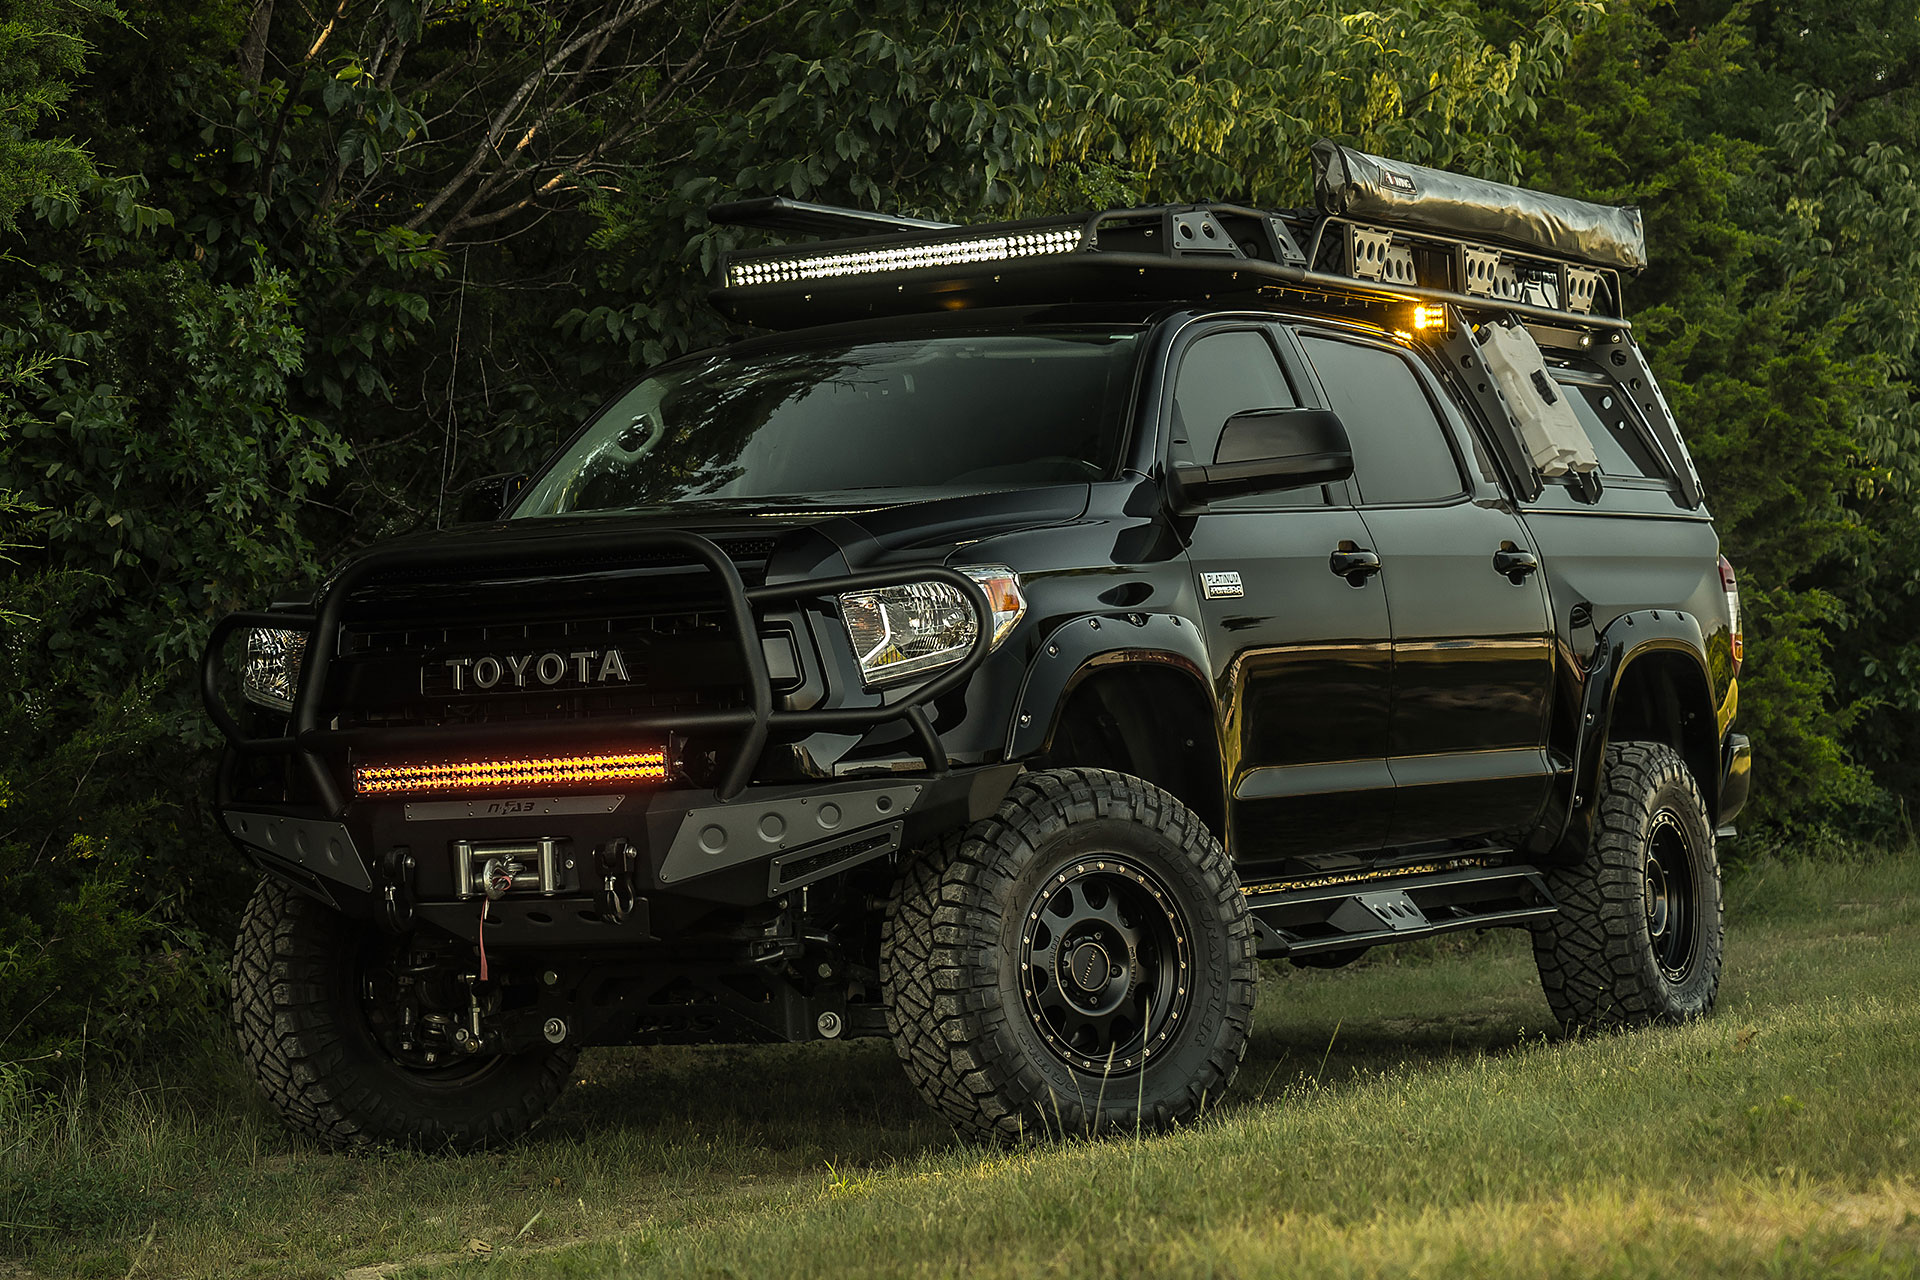 Toyota x Кевин Костнер Tundra Adventure Truck